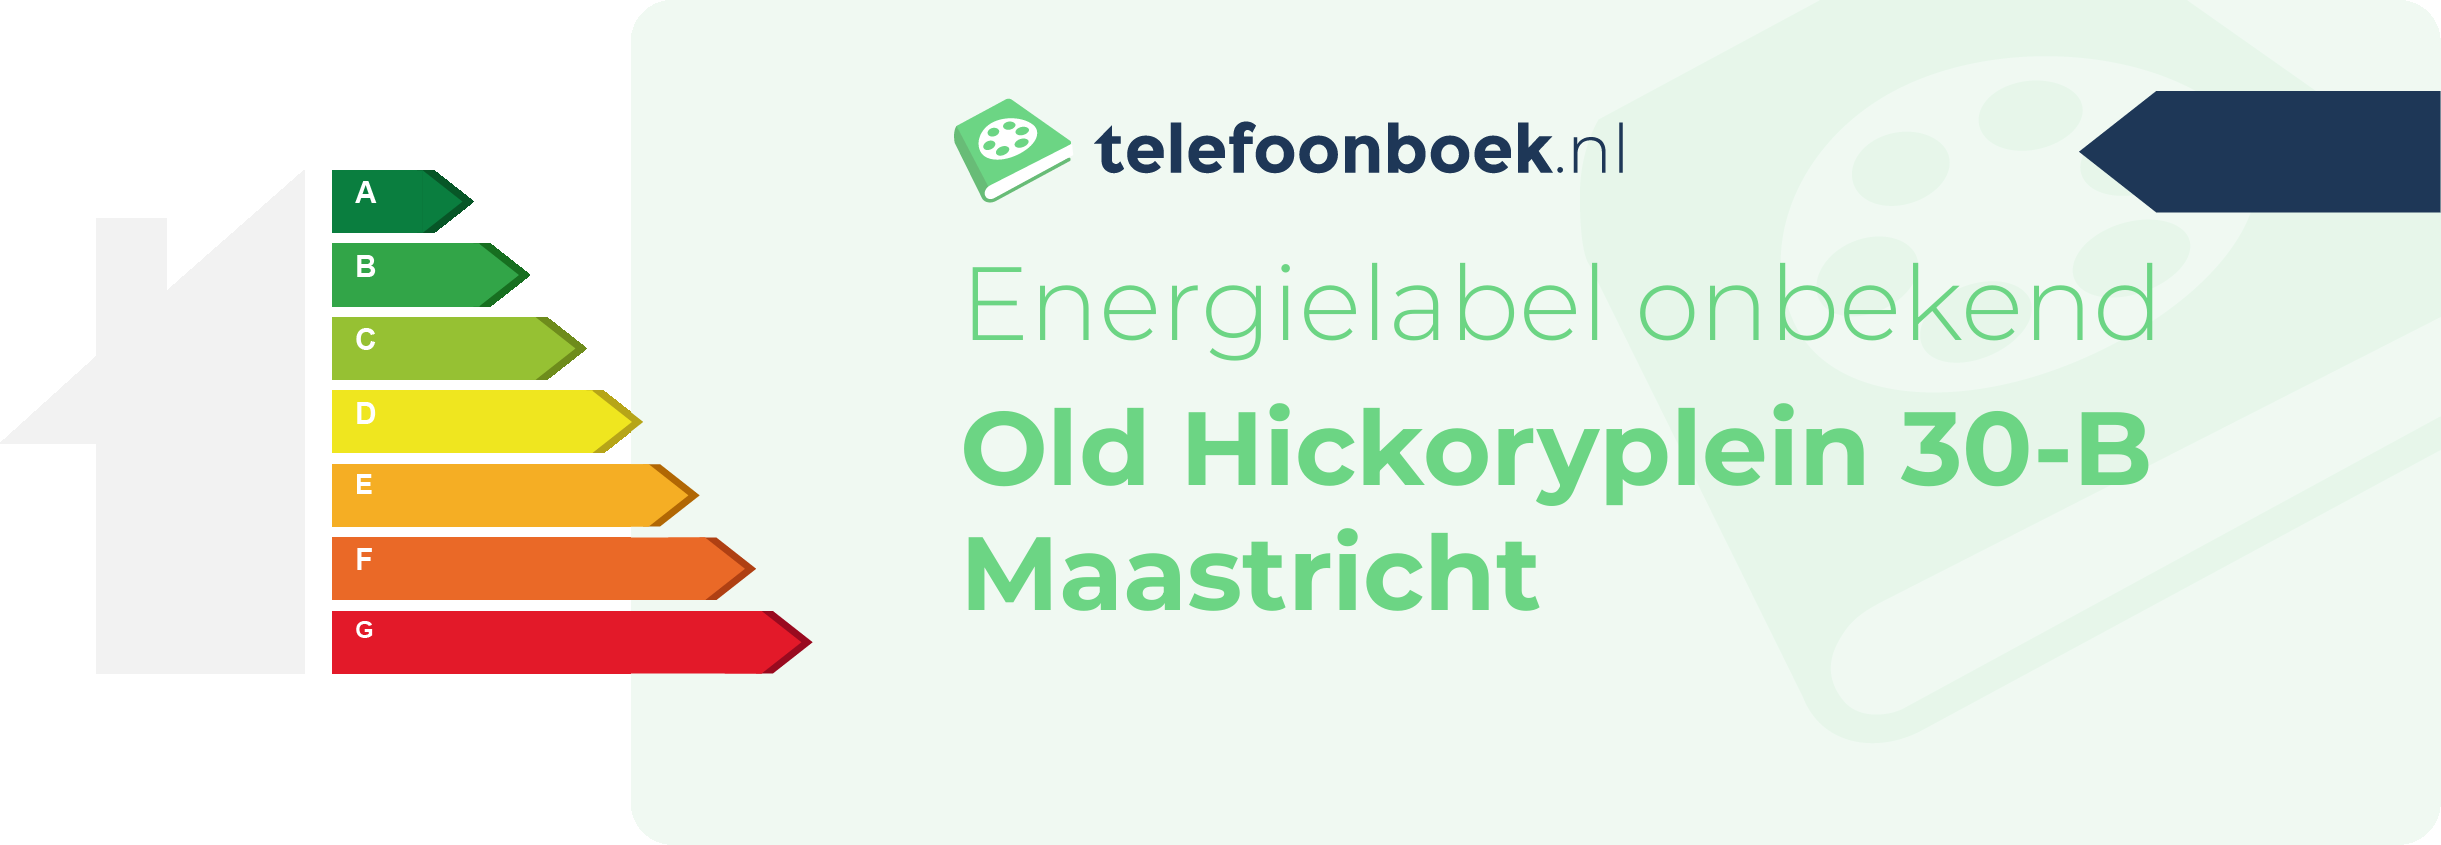 Energielabel Old Hickoryplein 30-B Maastricht